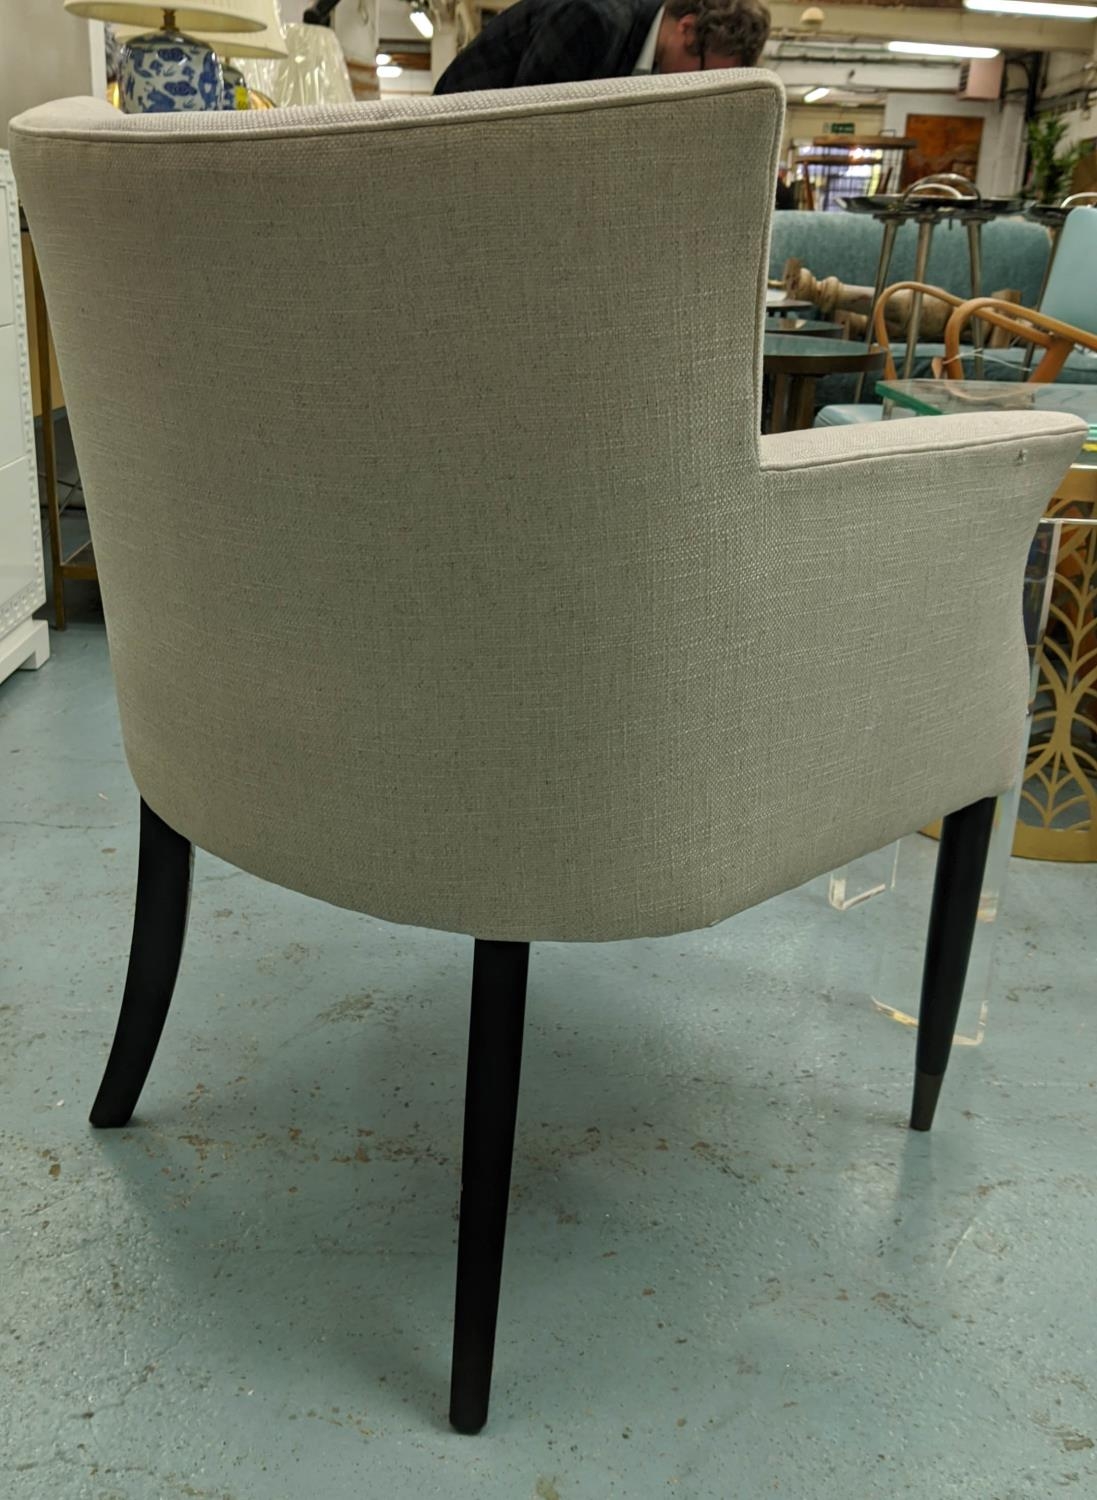 ARMCHAIR, 82cm H, white fabric upholstered, ebonised legs. - Image 5 of 6